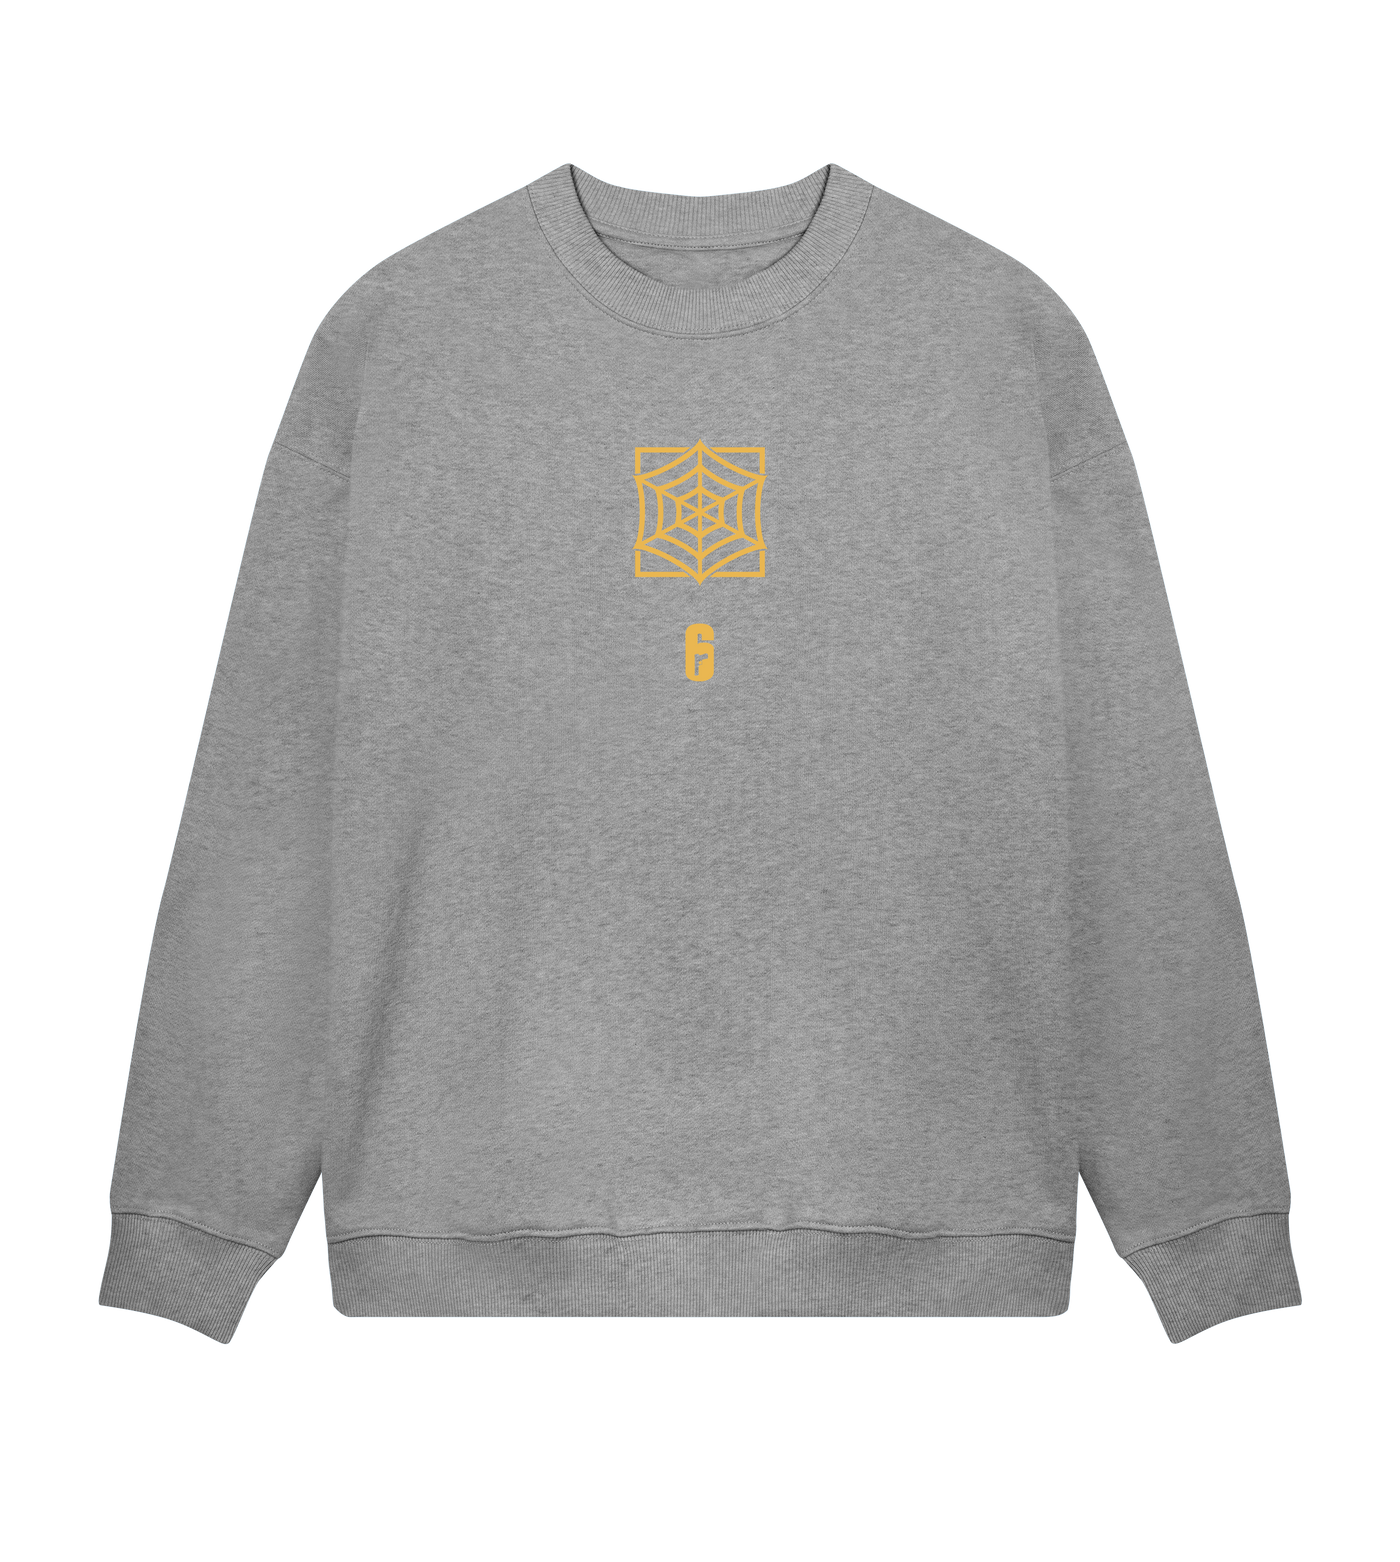 6 SIEGE – Jäger Graues Sweatshirt